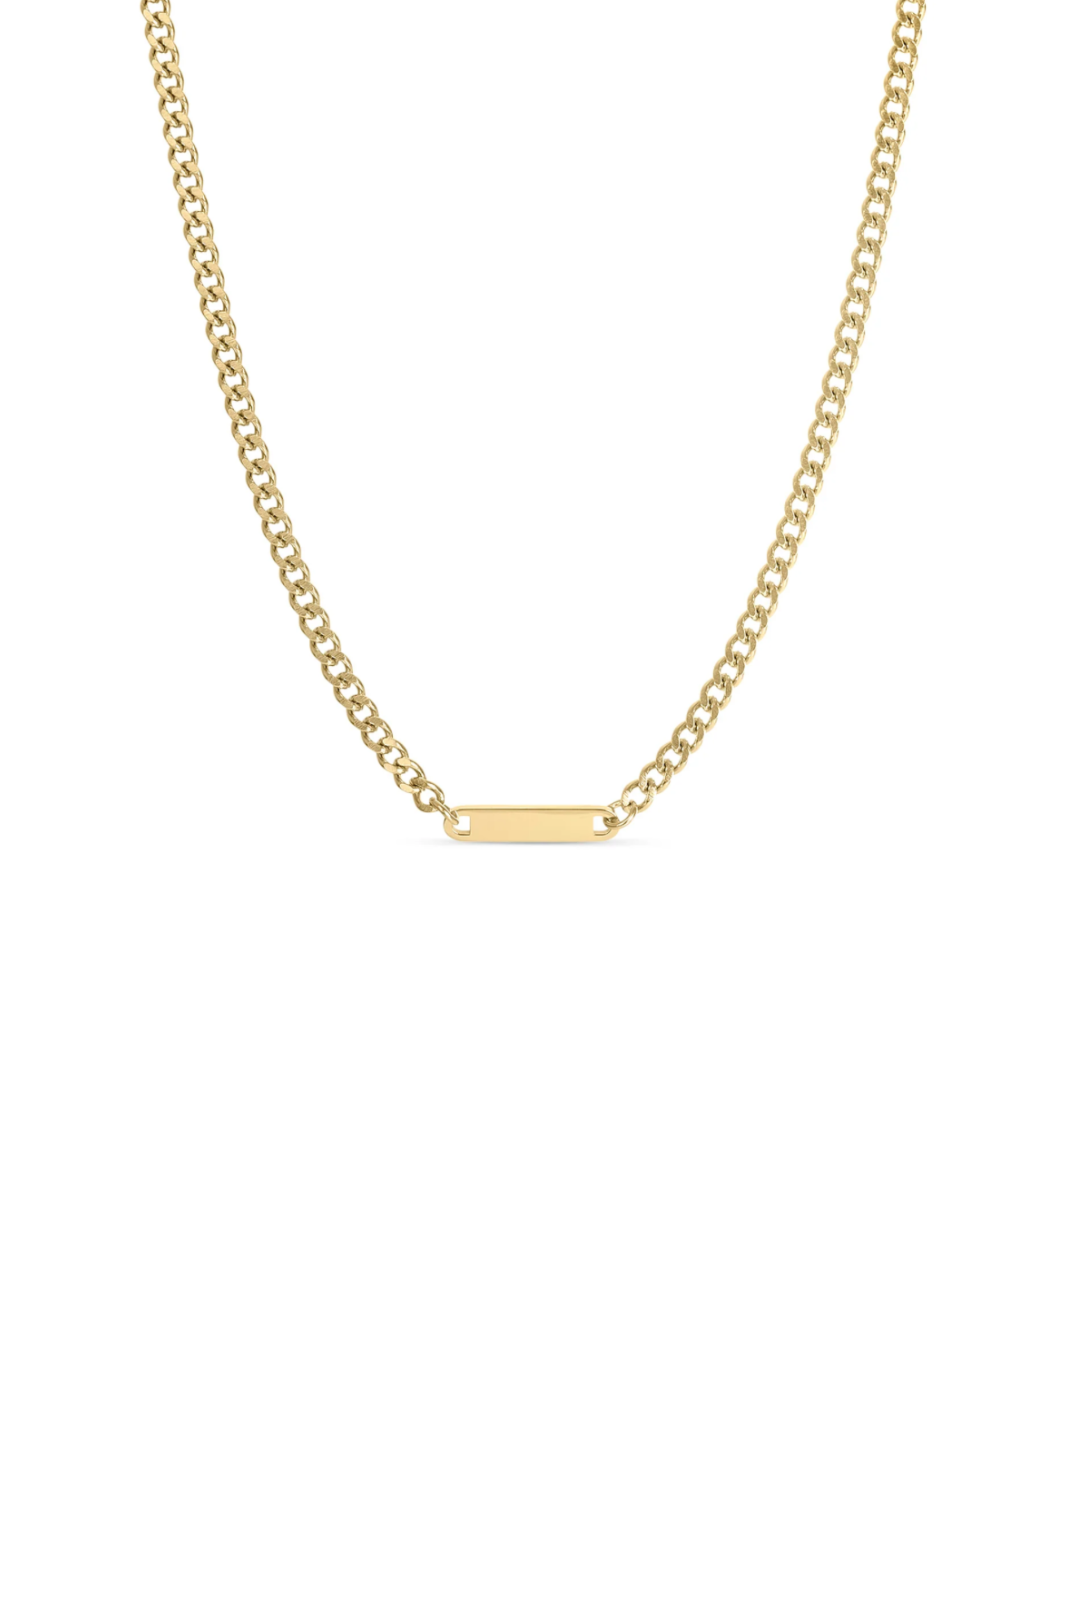 Gold Curb Chain Charm Necklace - Engravable